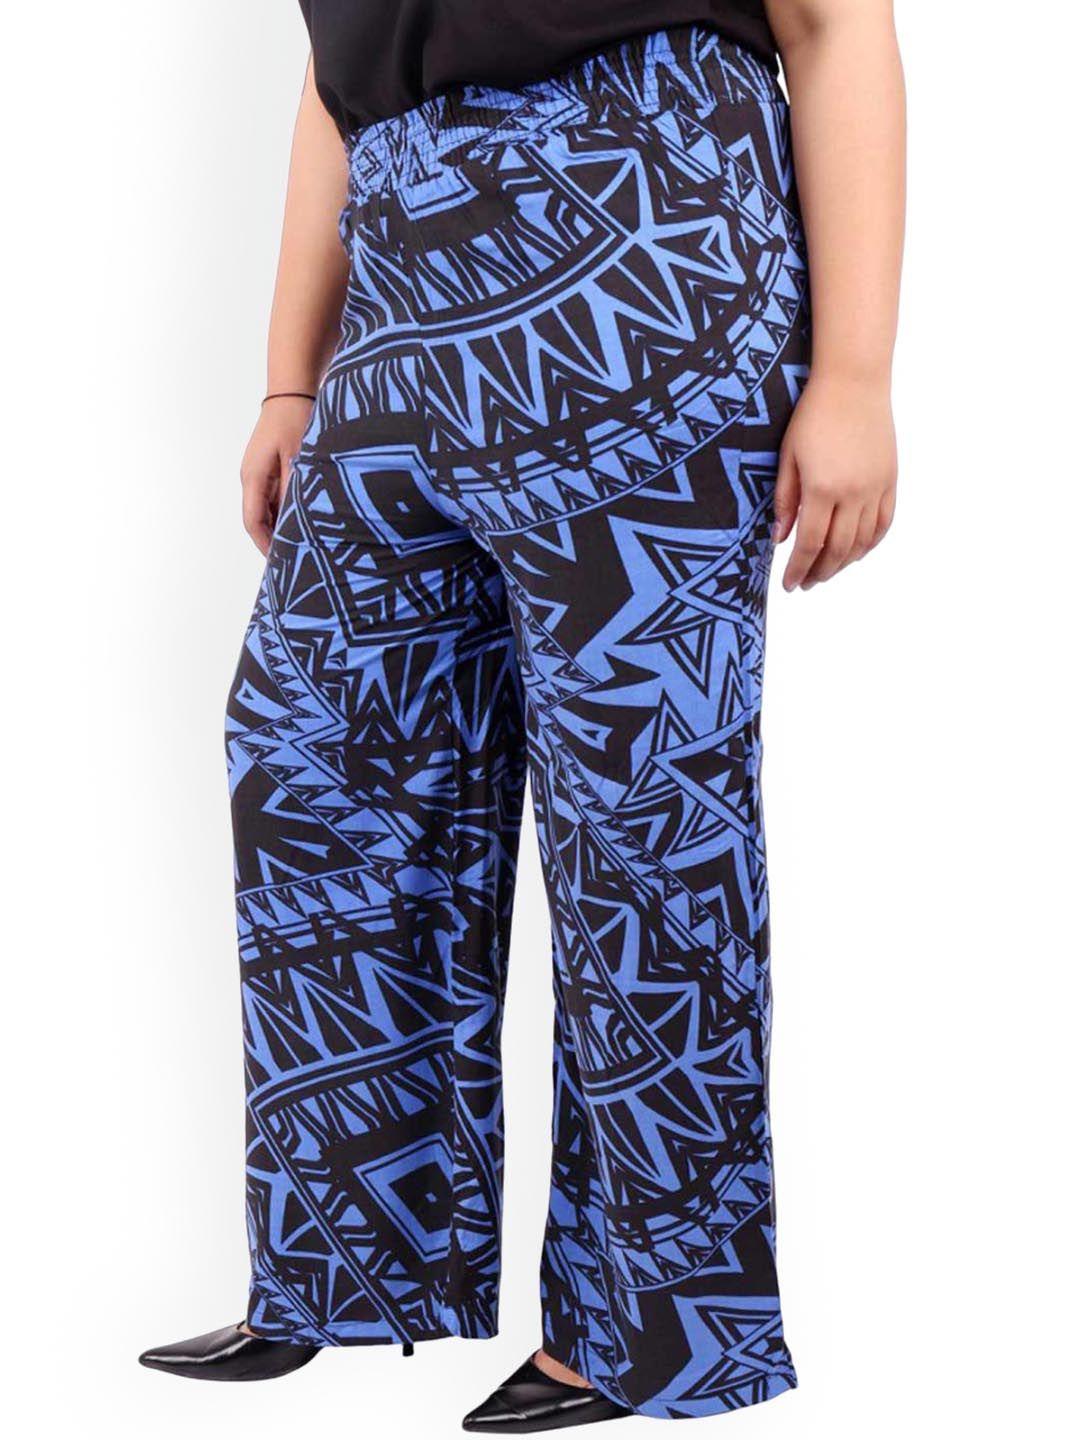 lastinch women plus size geometric printed original straight fit parallel trouser